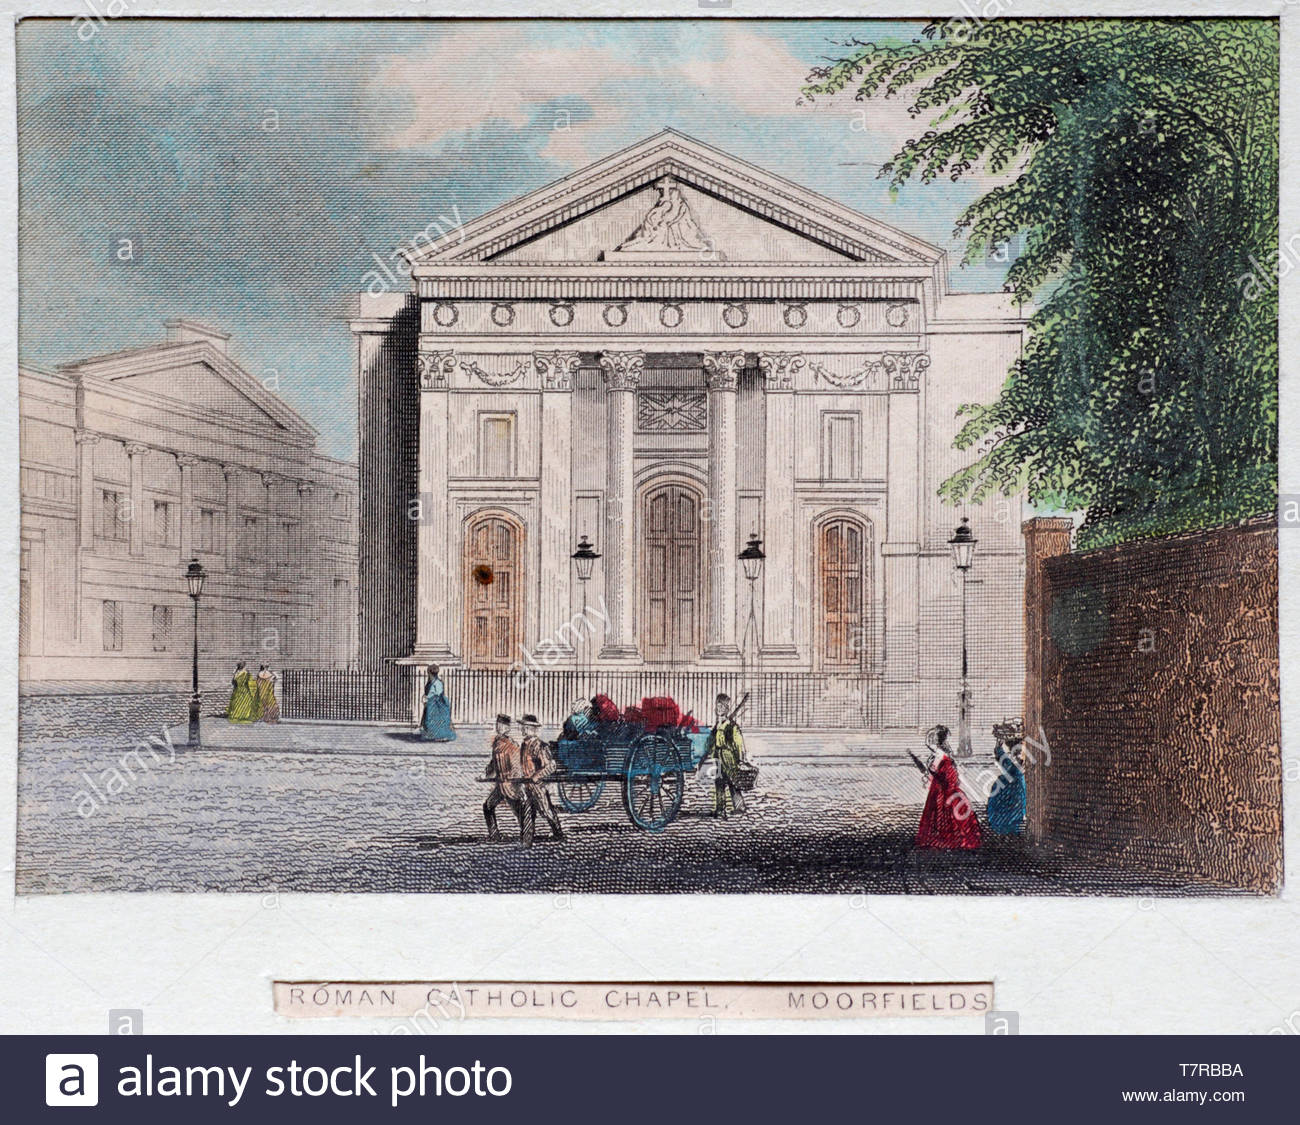 Roman Catholic Chapel, Moorfields London, antique engraving from 1850s Stock Photo